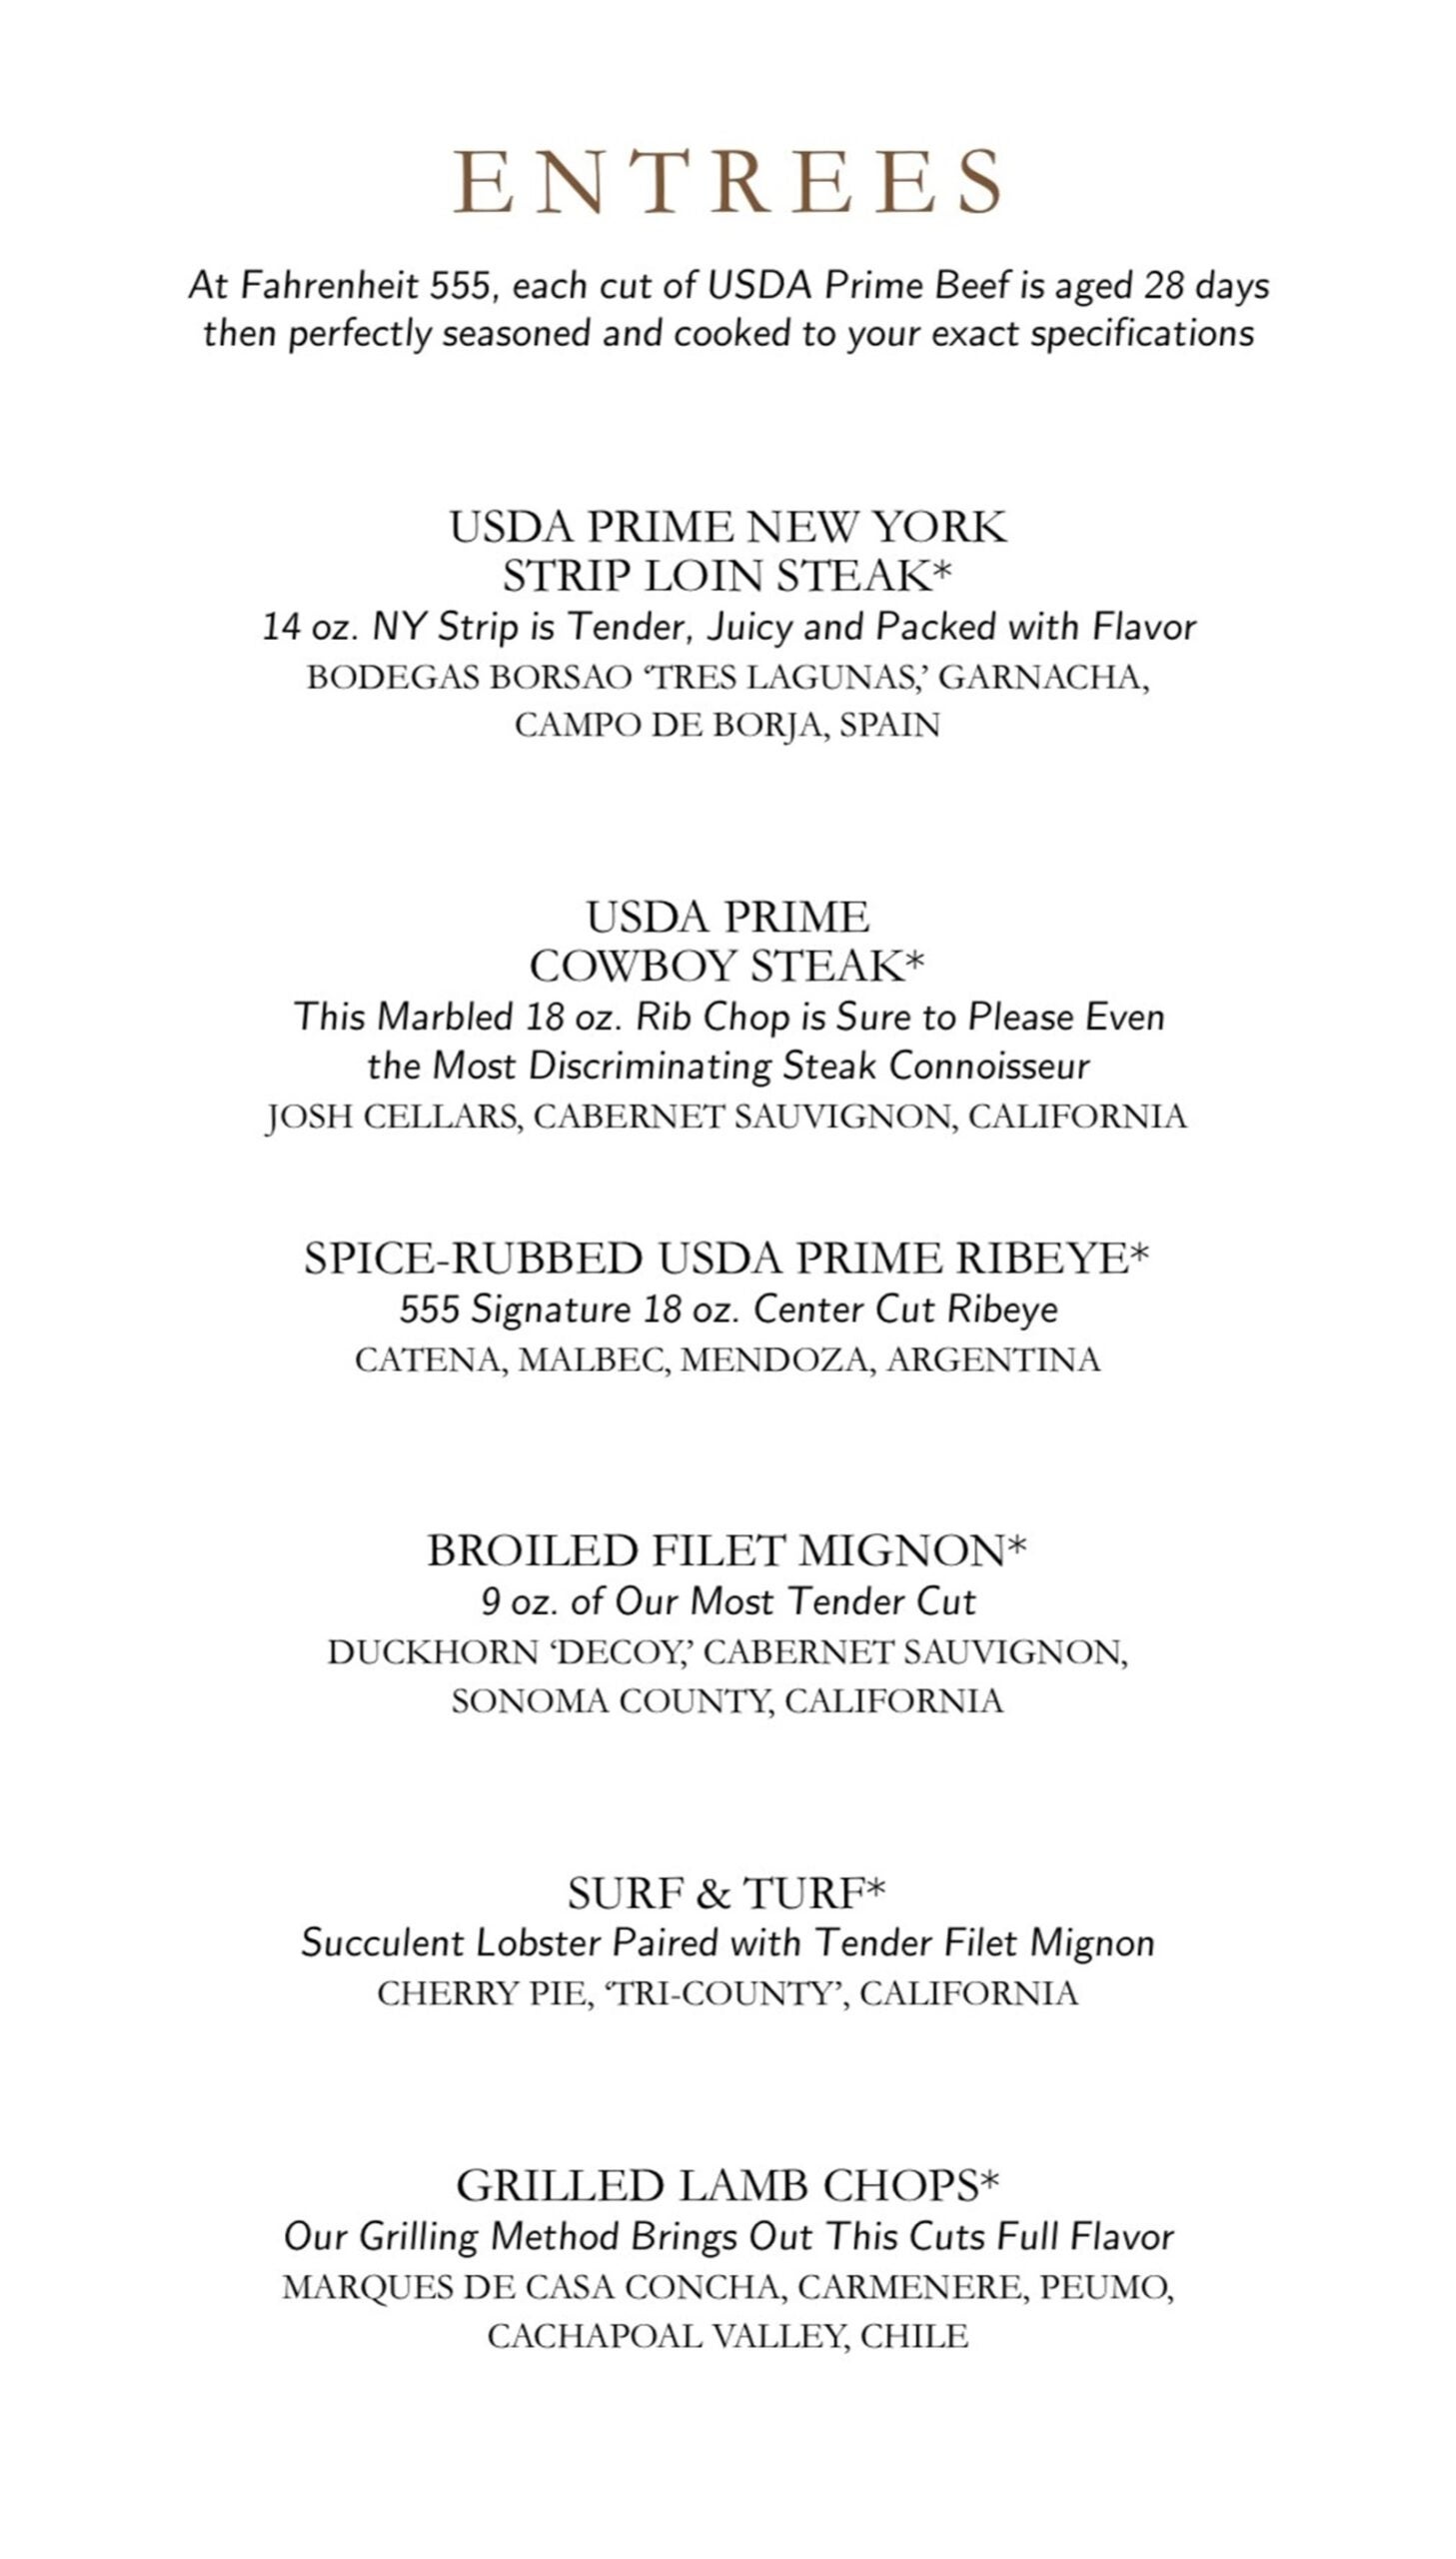 A steakhouse menu listing main dishes